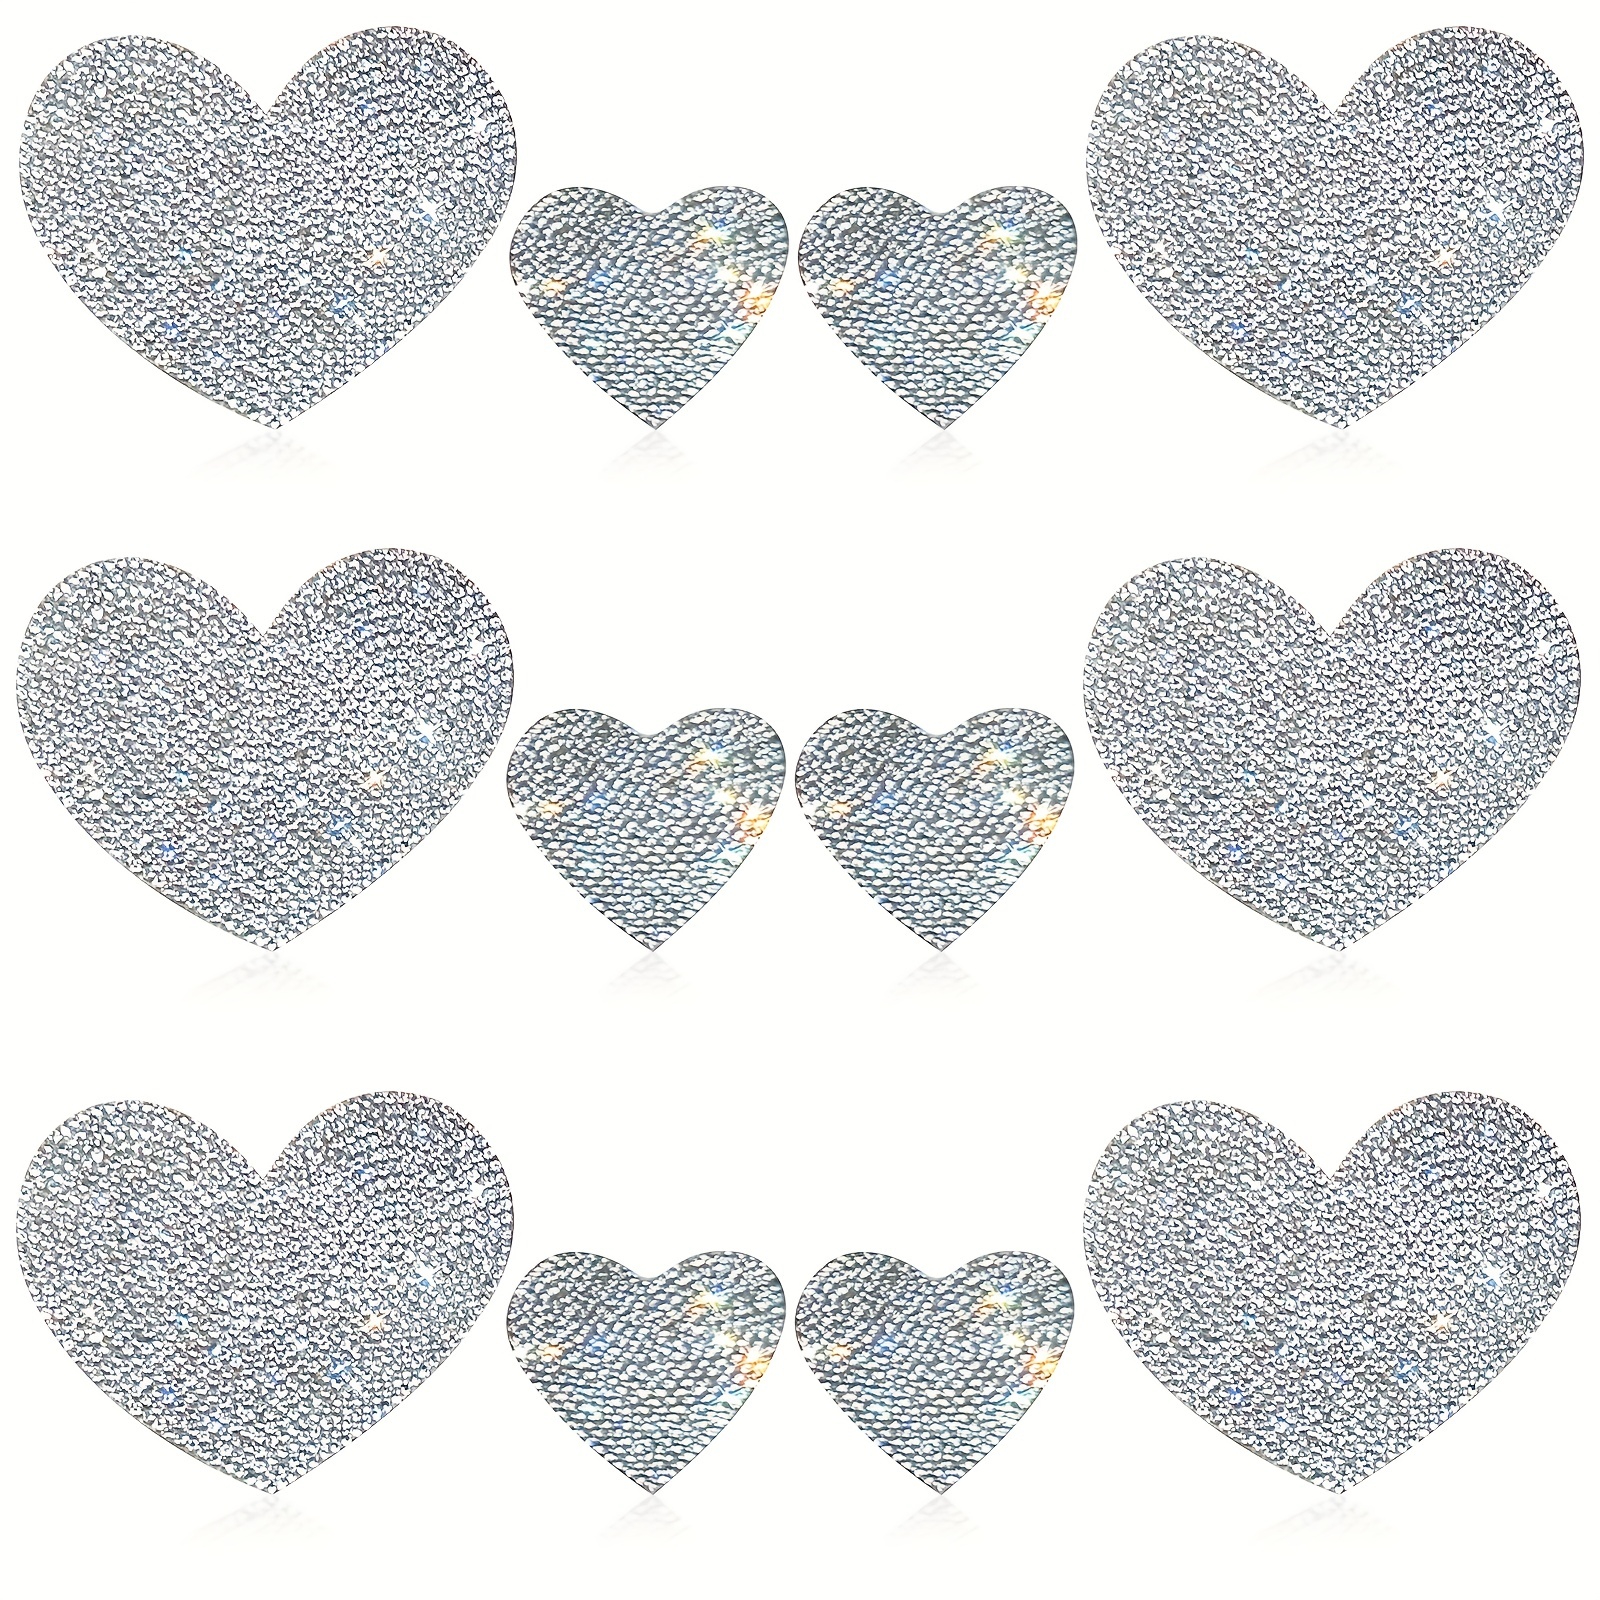 Diamond, shiny rhinestone, gem. White sparkle diamond, crystal.  Leggings  for Sale by iclipart